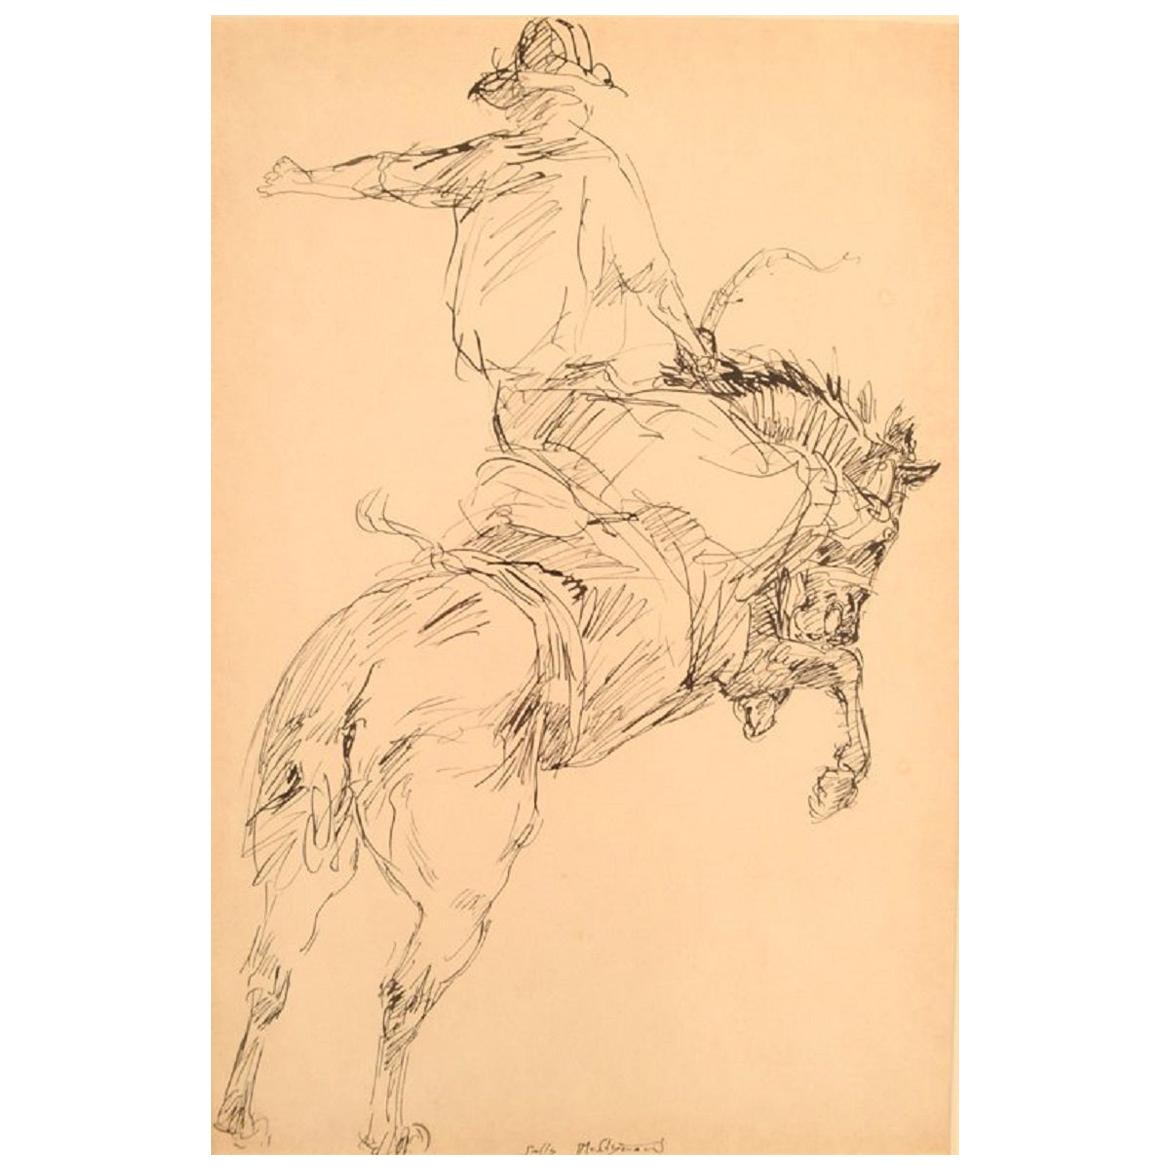 Sally McClymont, Australia, Tusch Drawing, Cowboy on Horse, Late 20th Century